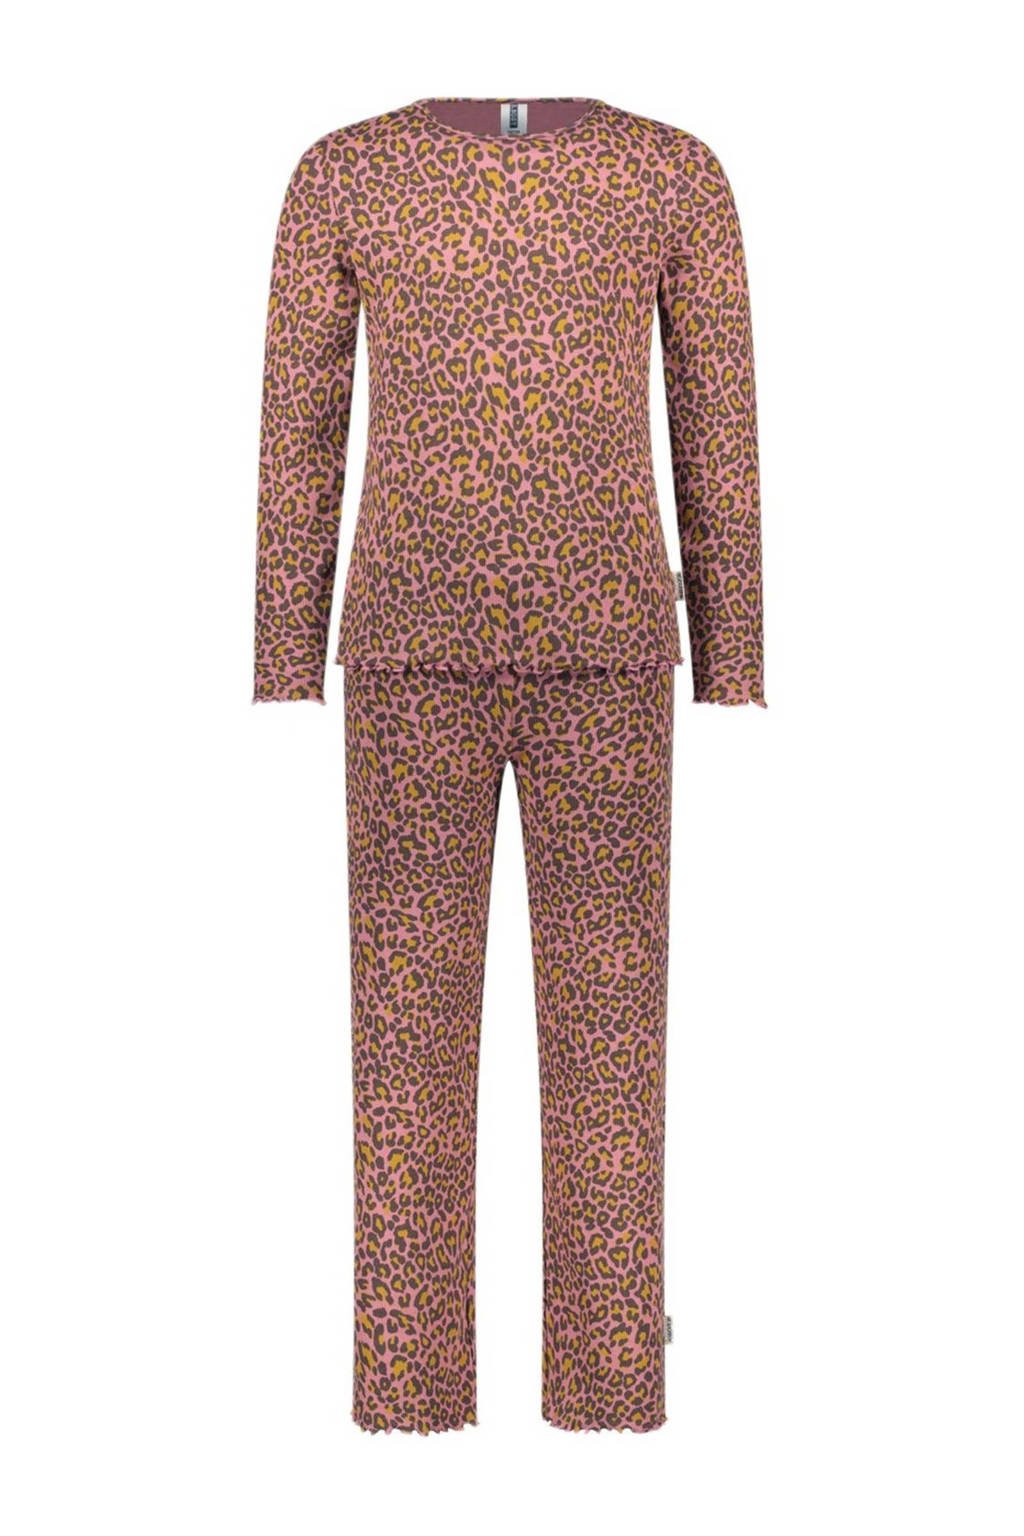 pyjama B. a SLEEP met dierenprint bruin/roze